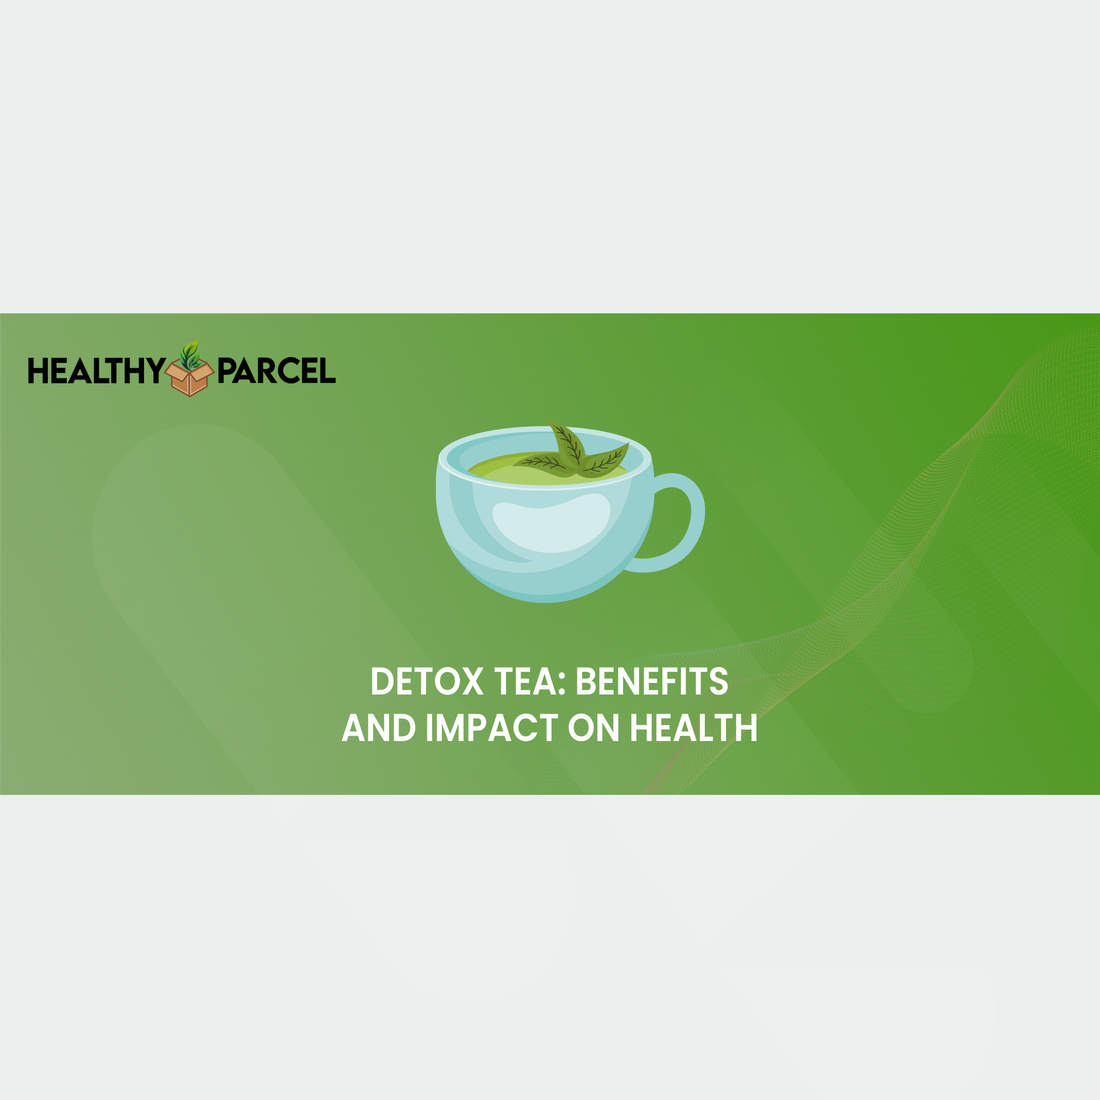 Detox Tea: Benefits and Impact on Health